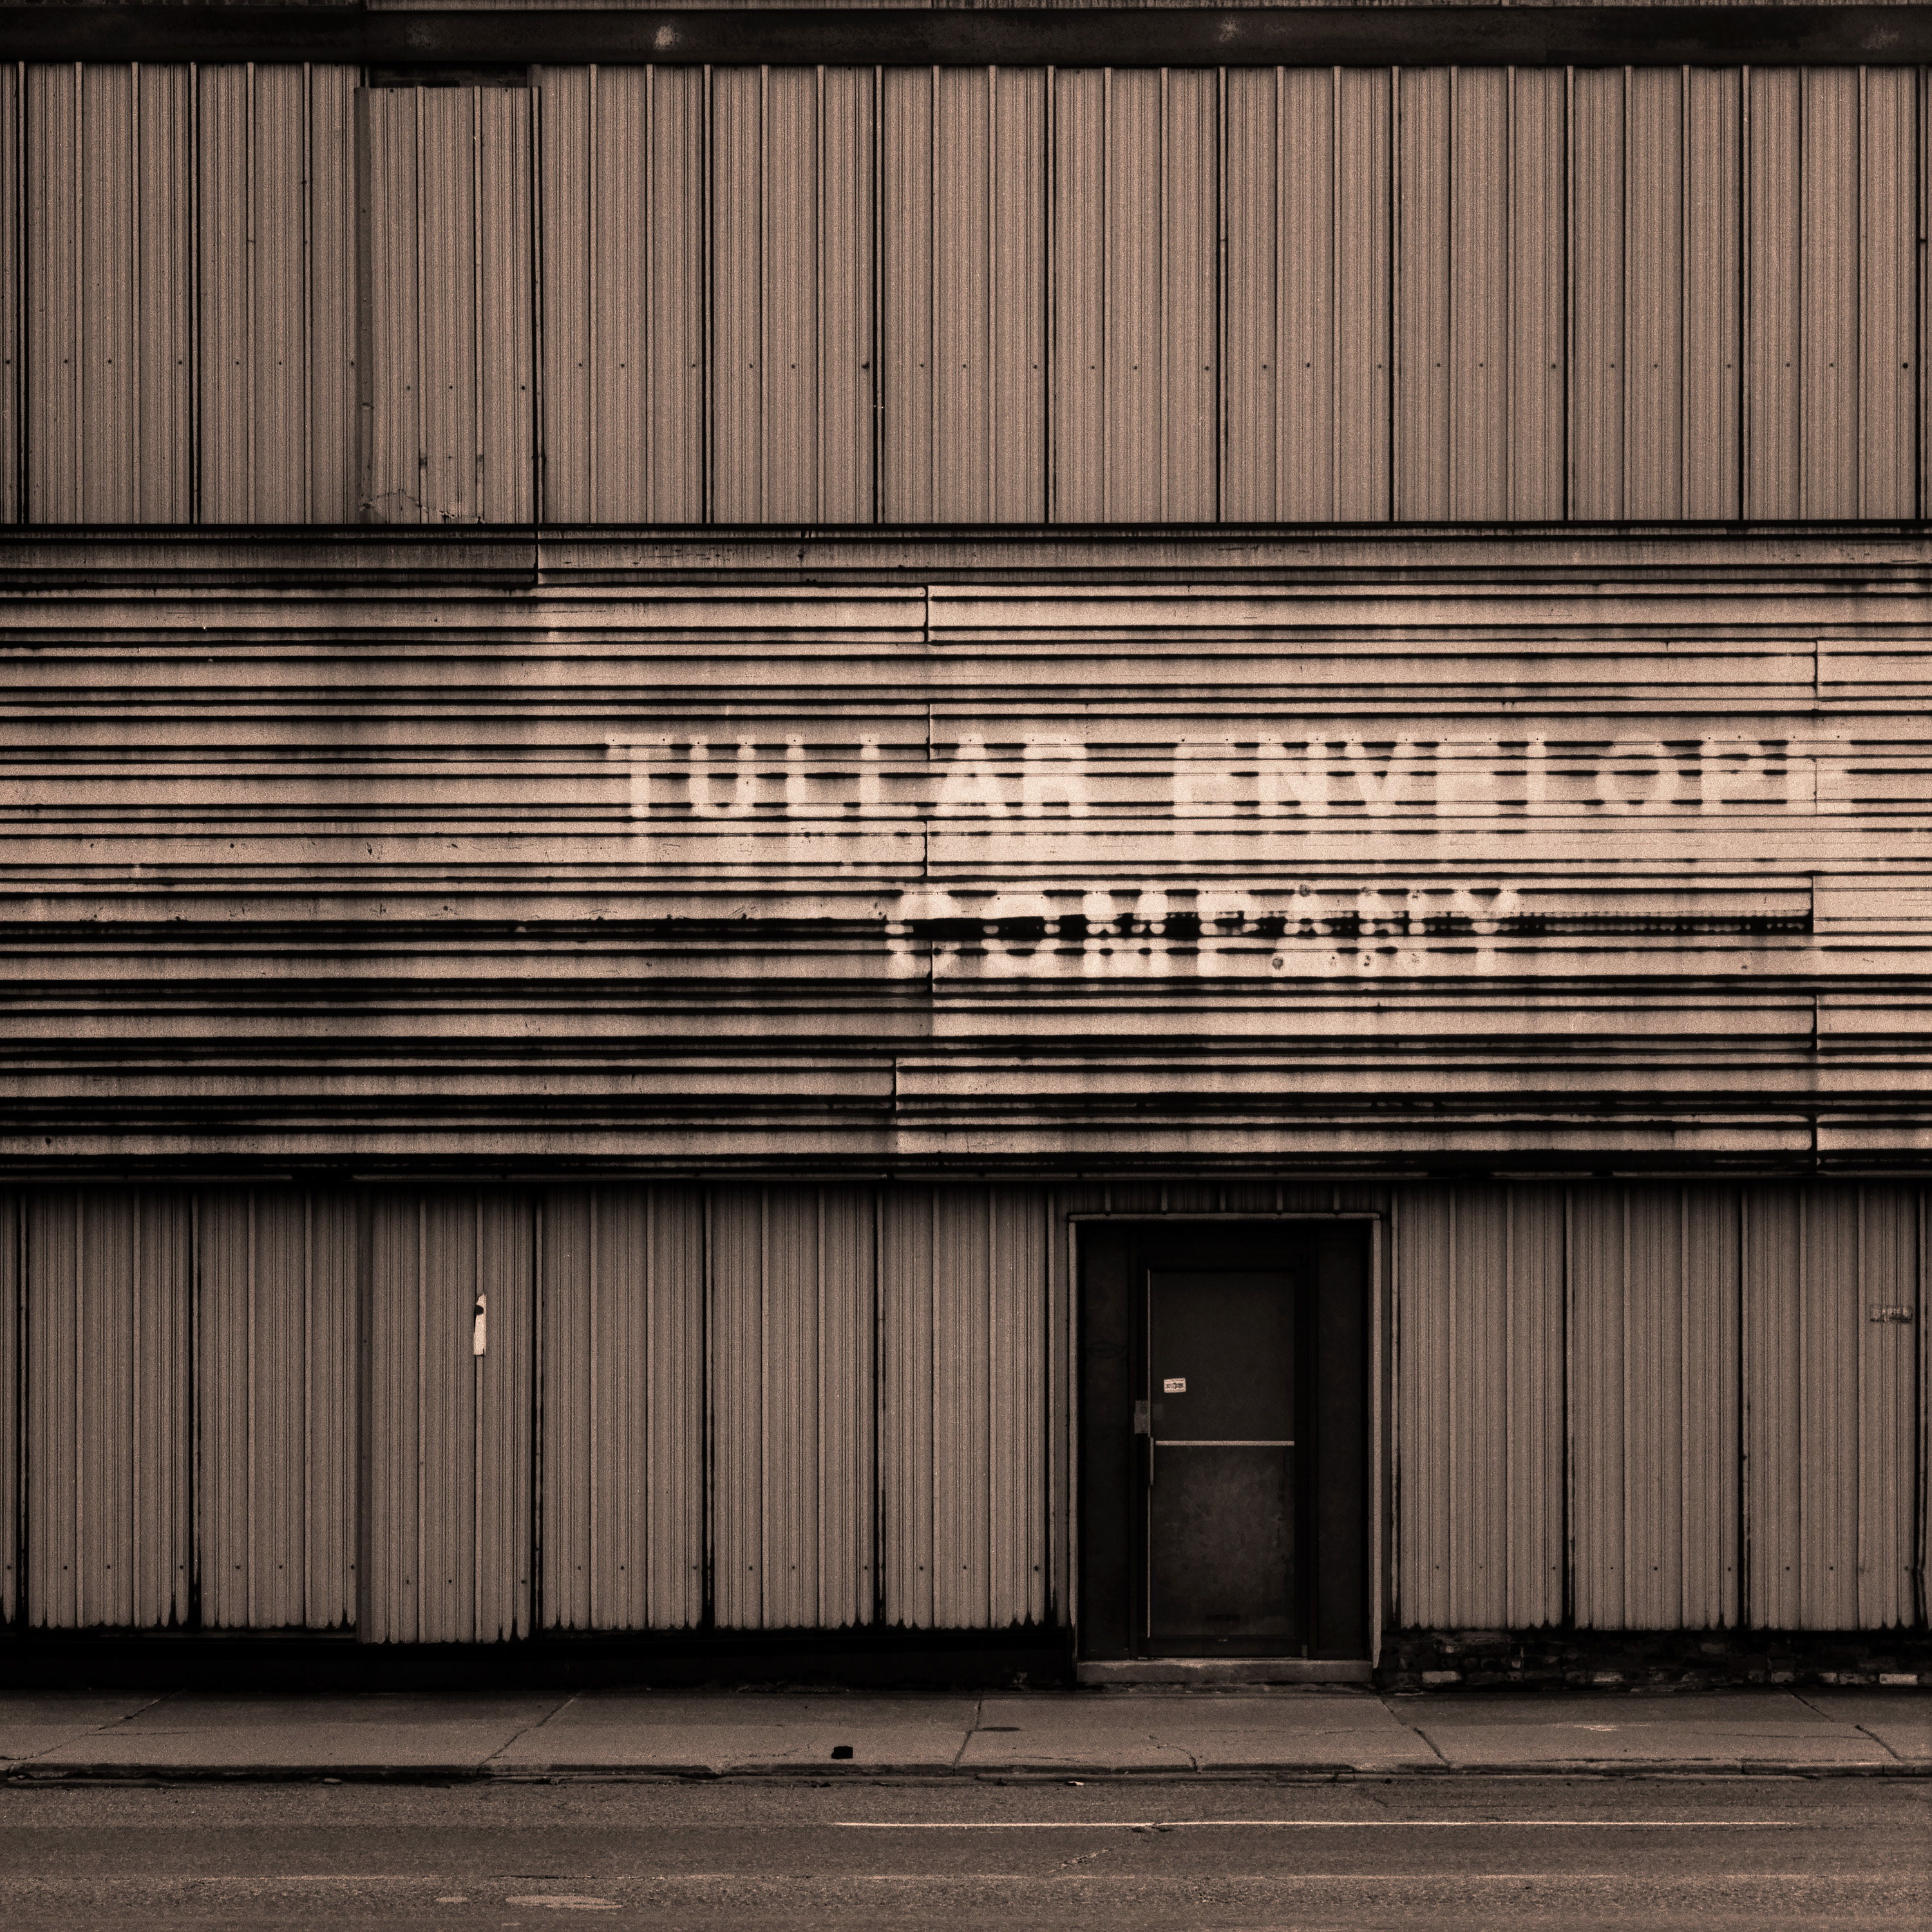 Tuller Envelope Company. Detroit, Michigan.